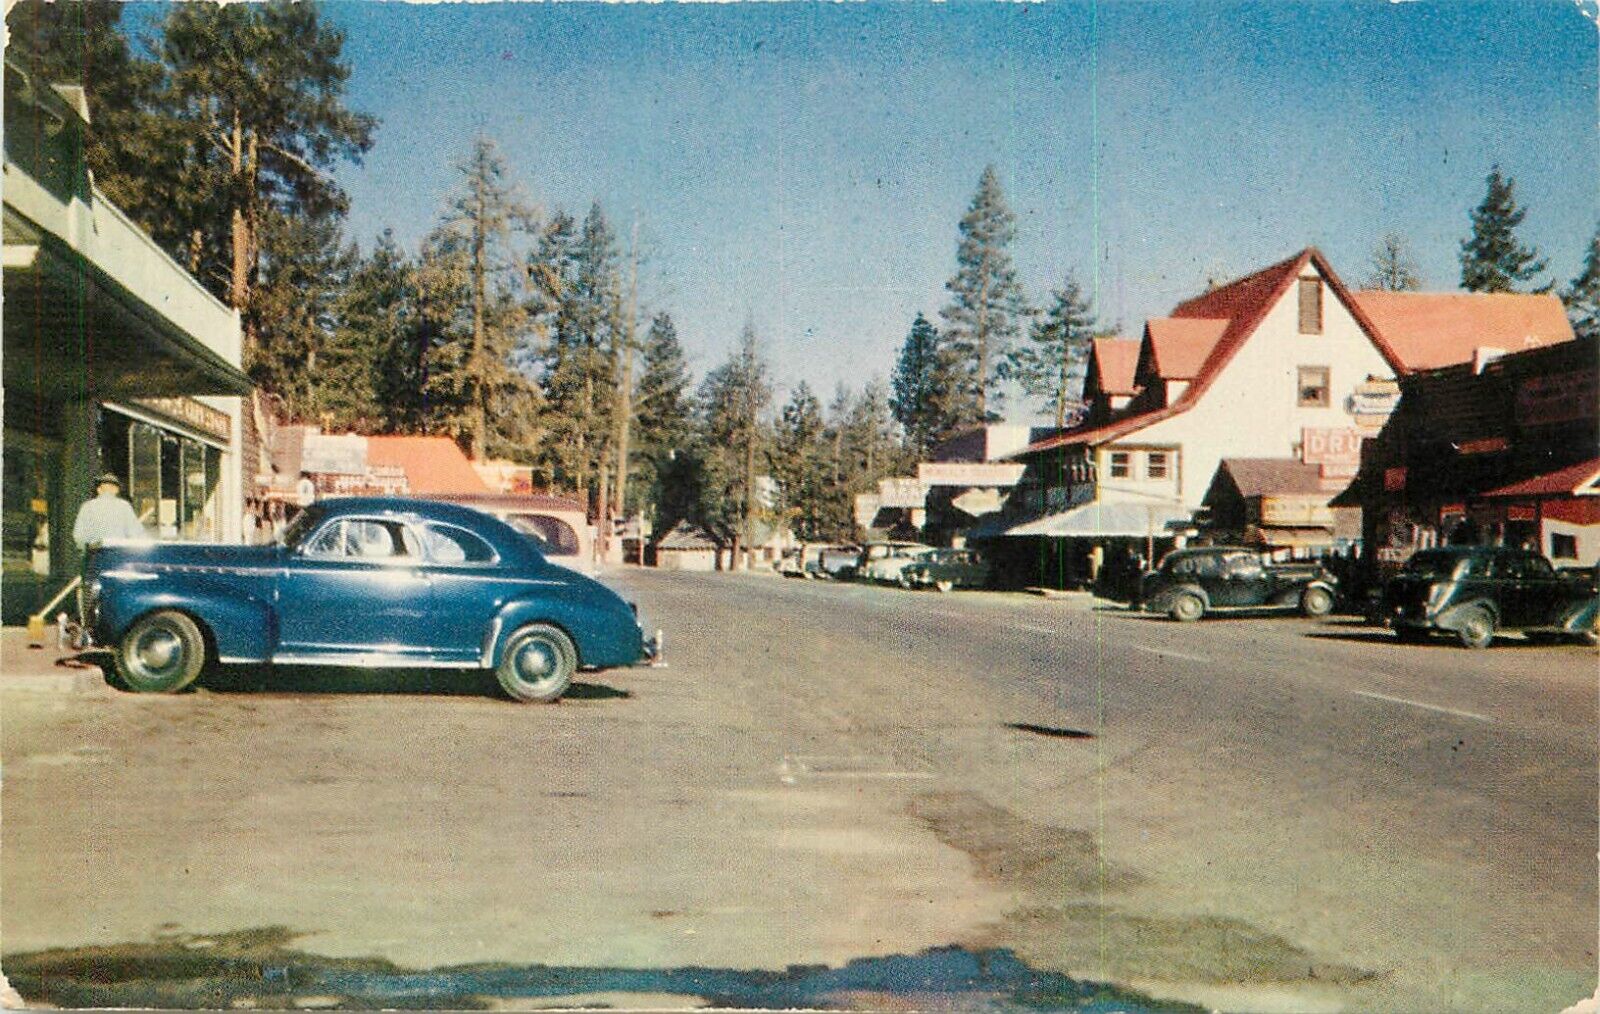 c1950s Main Street, Big Bear, California Postcard